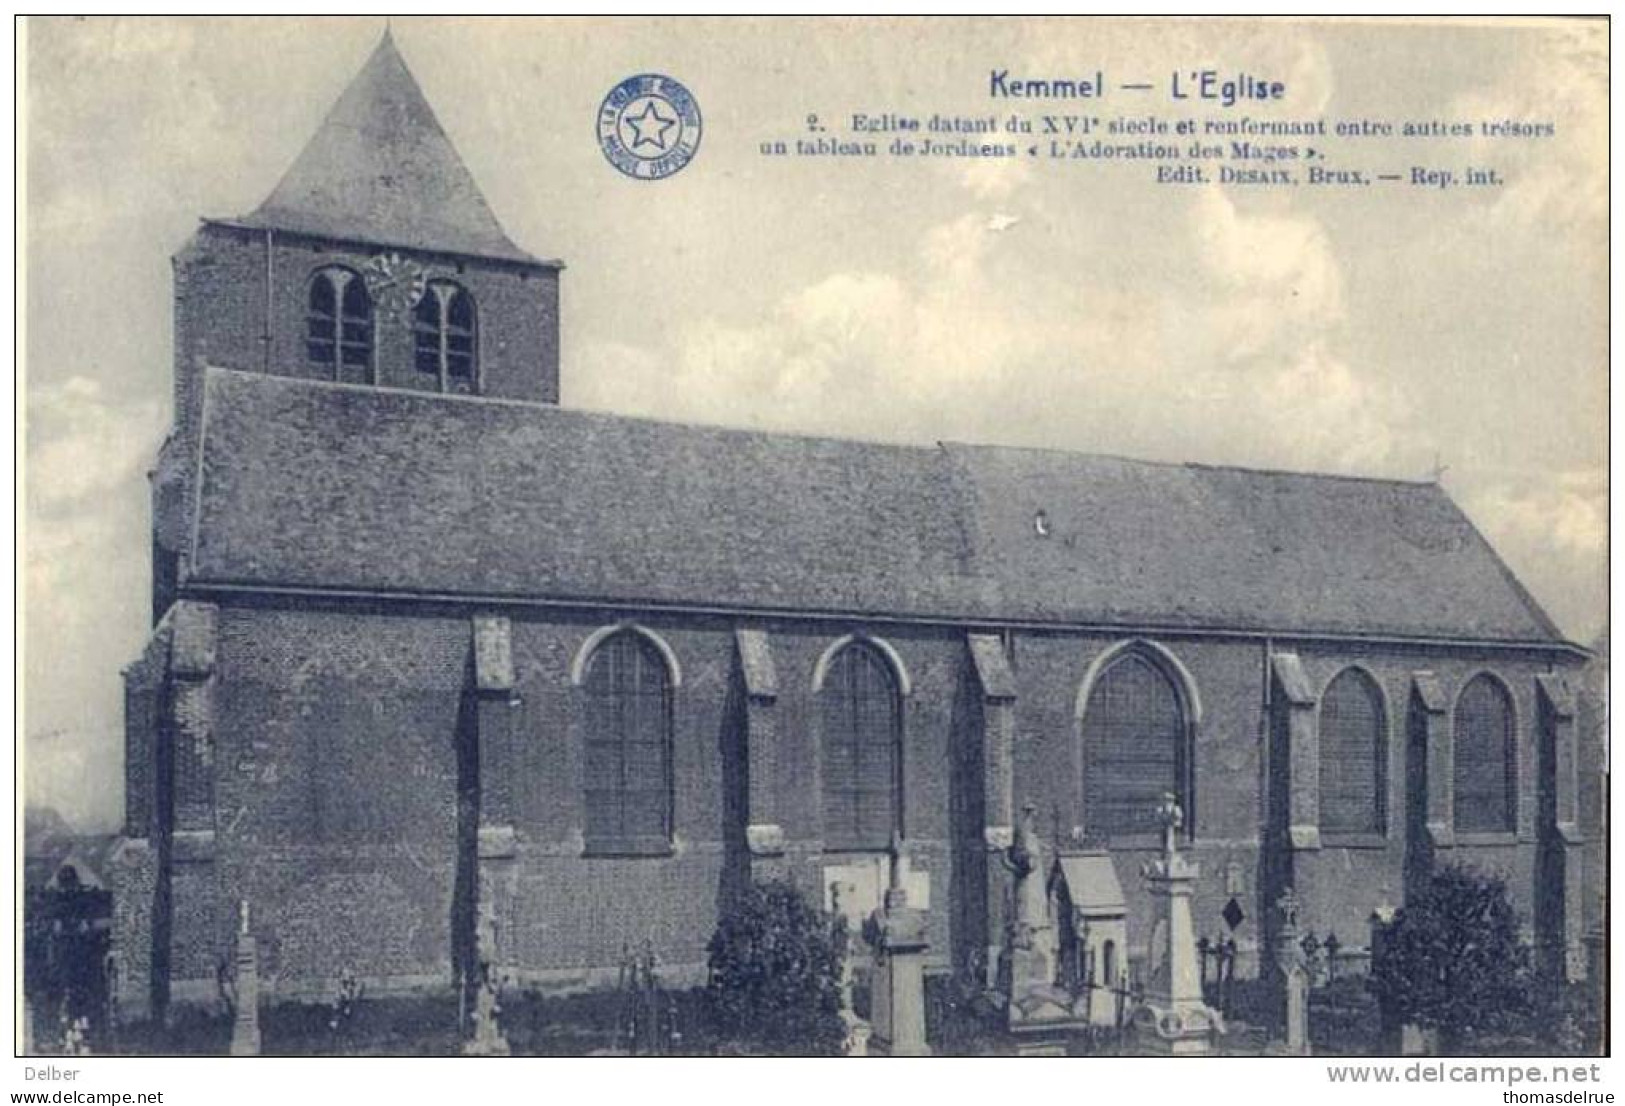 _ik540-7 :6- KEMMEL - L'Eglise. - E.Desaix, Edit.Brux;.. - Heuvelland